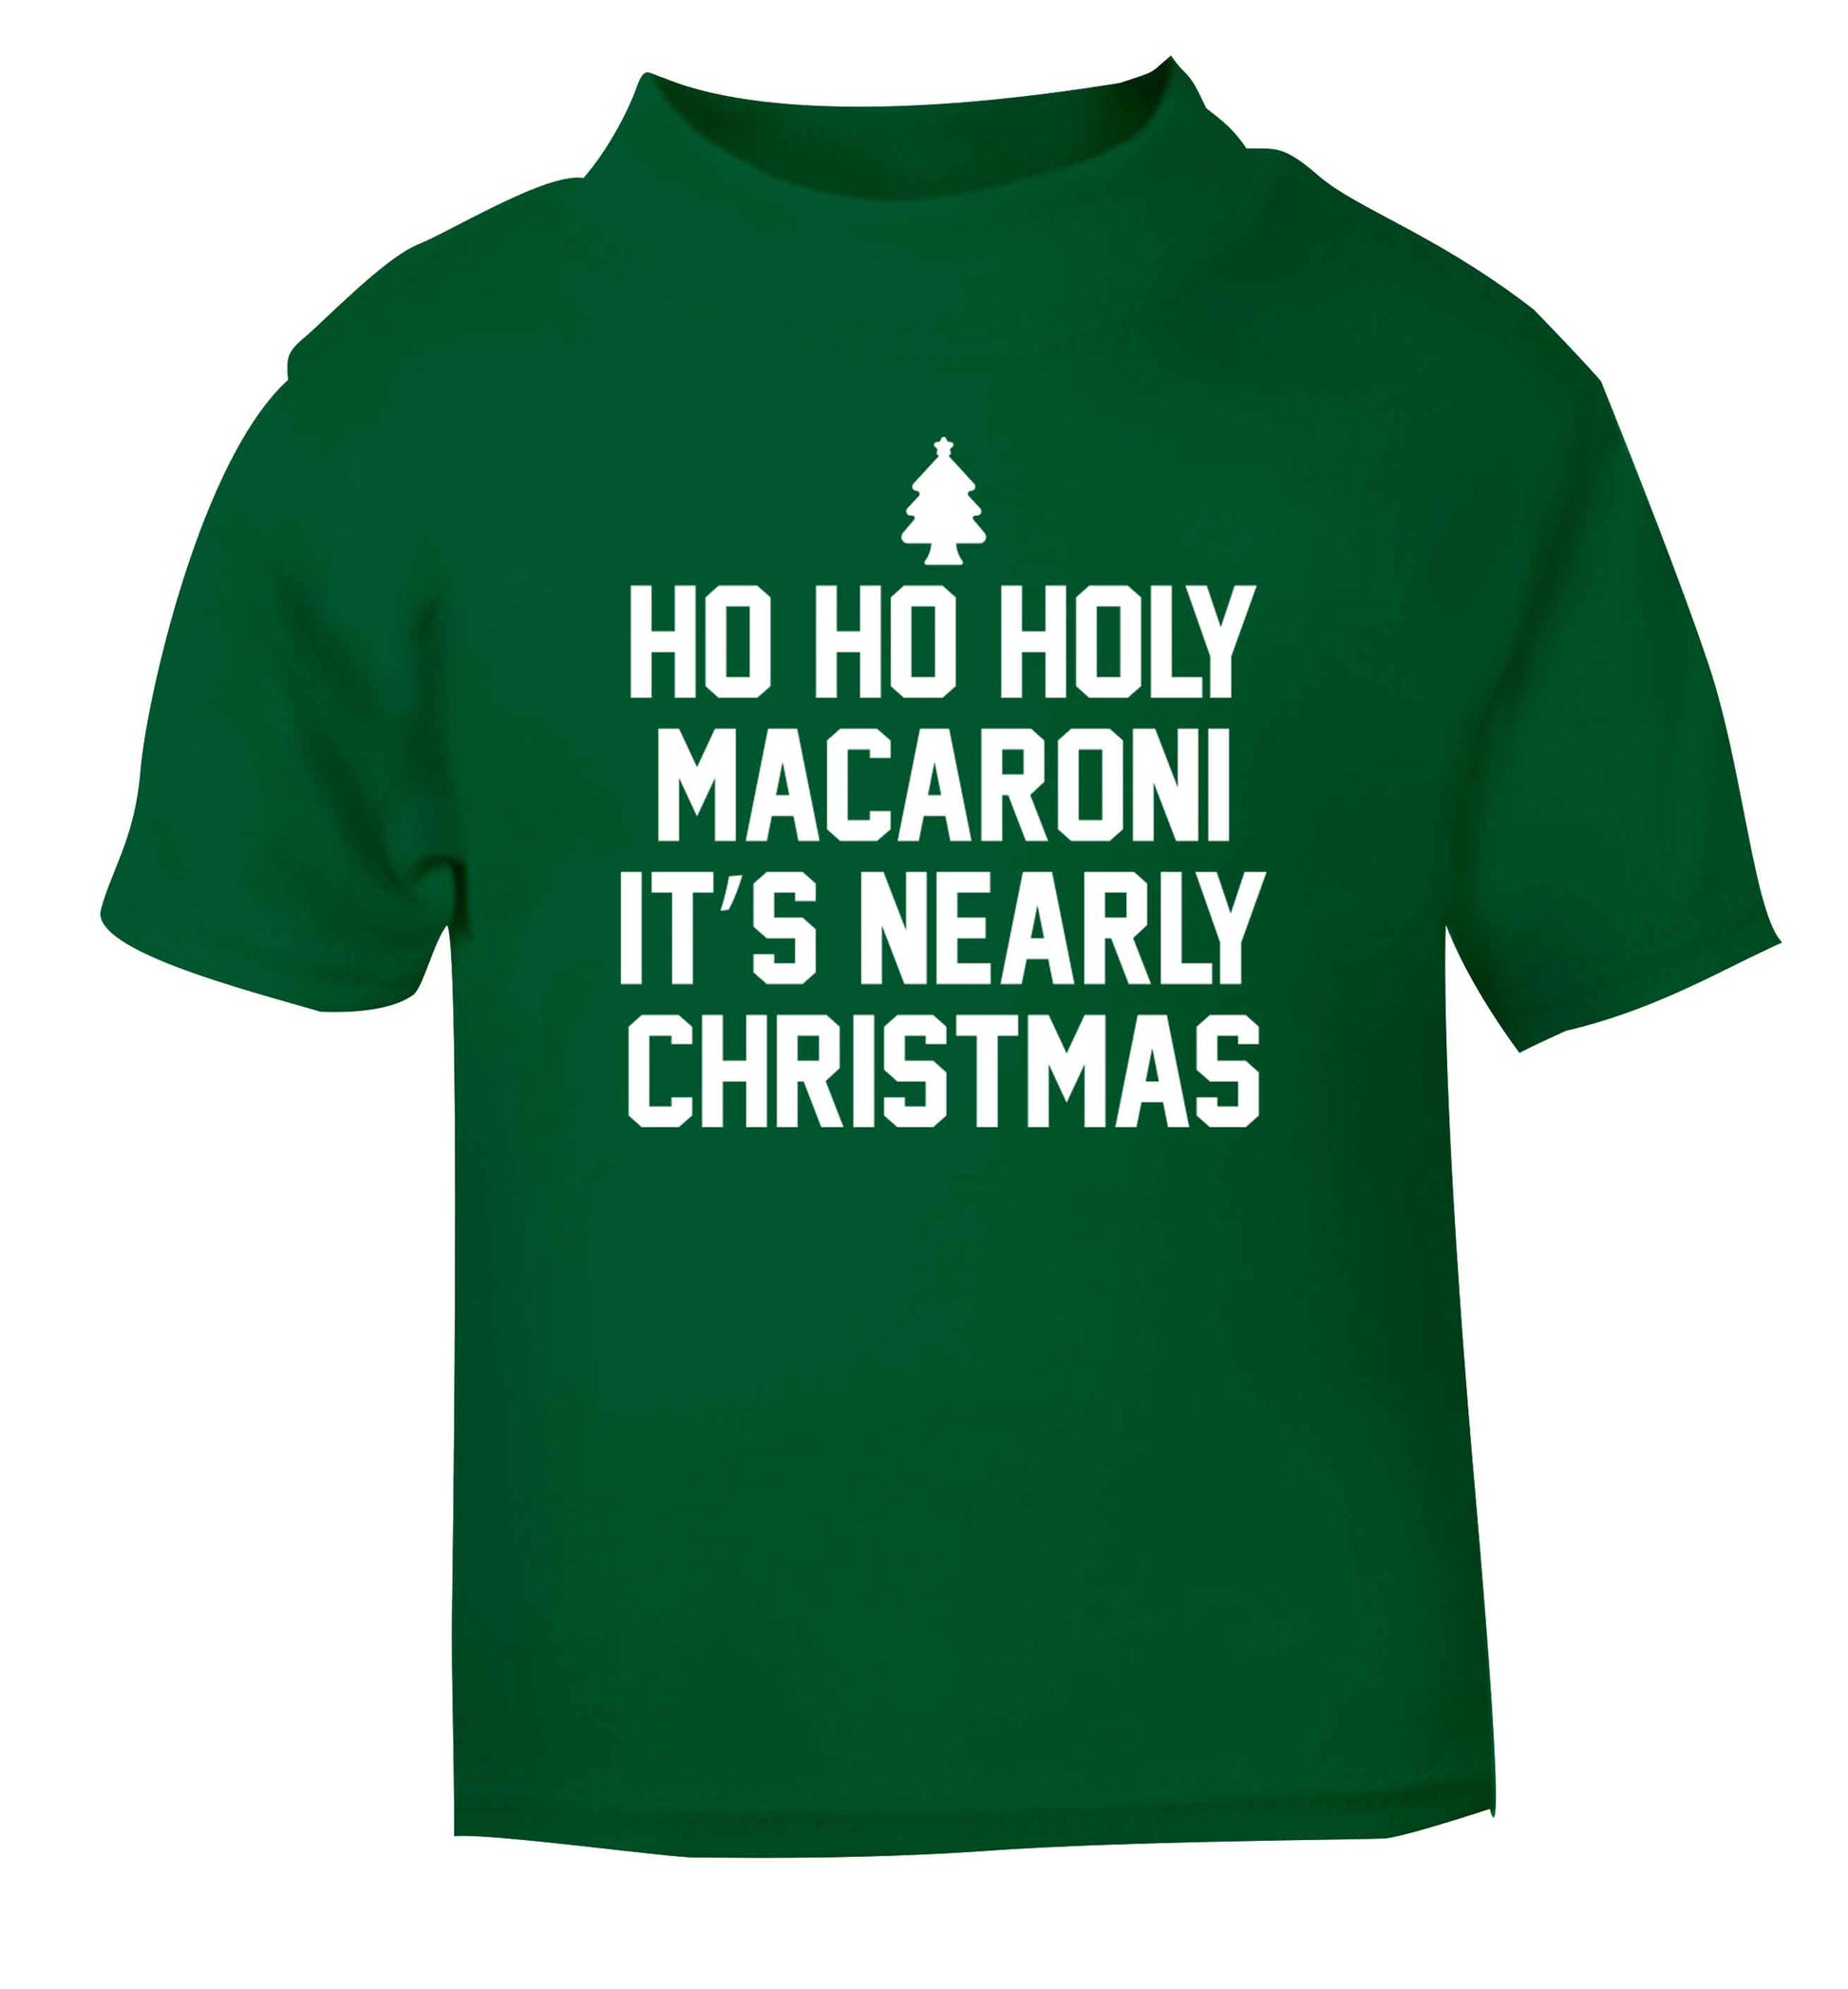 Ho ho holy macaroni it's nearly Christmas green Baby Toddler Tshirt 2 Years